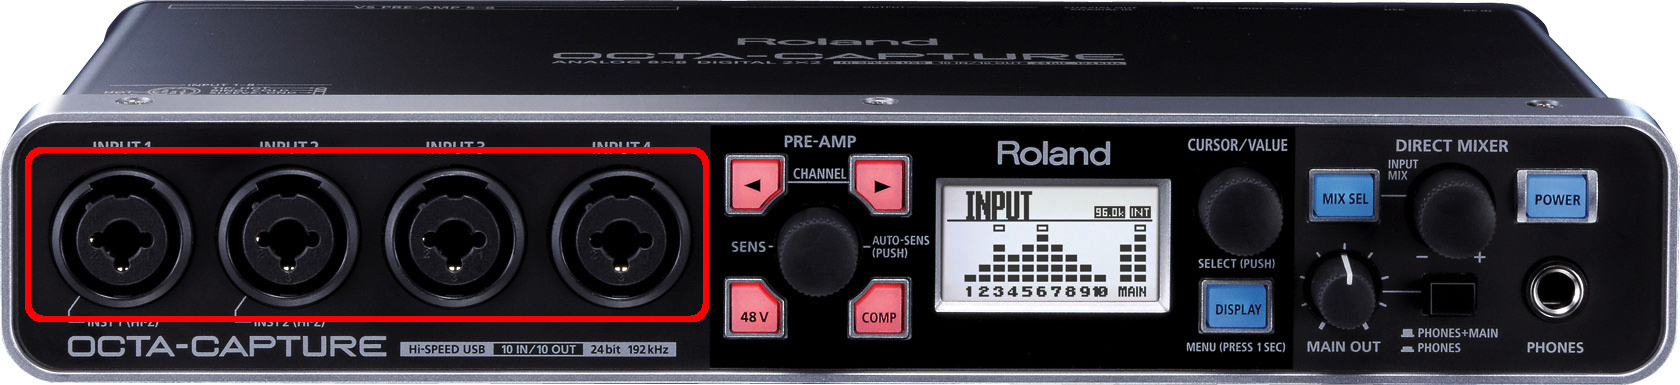 OCTA-CAPTURE, UA-1010: Connecting an External Audio Device or 